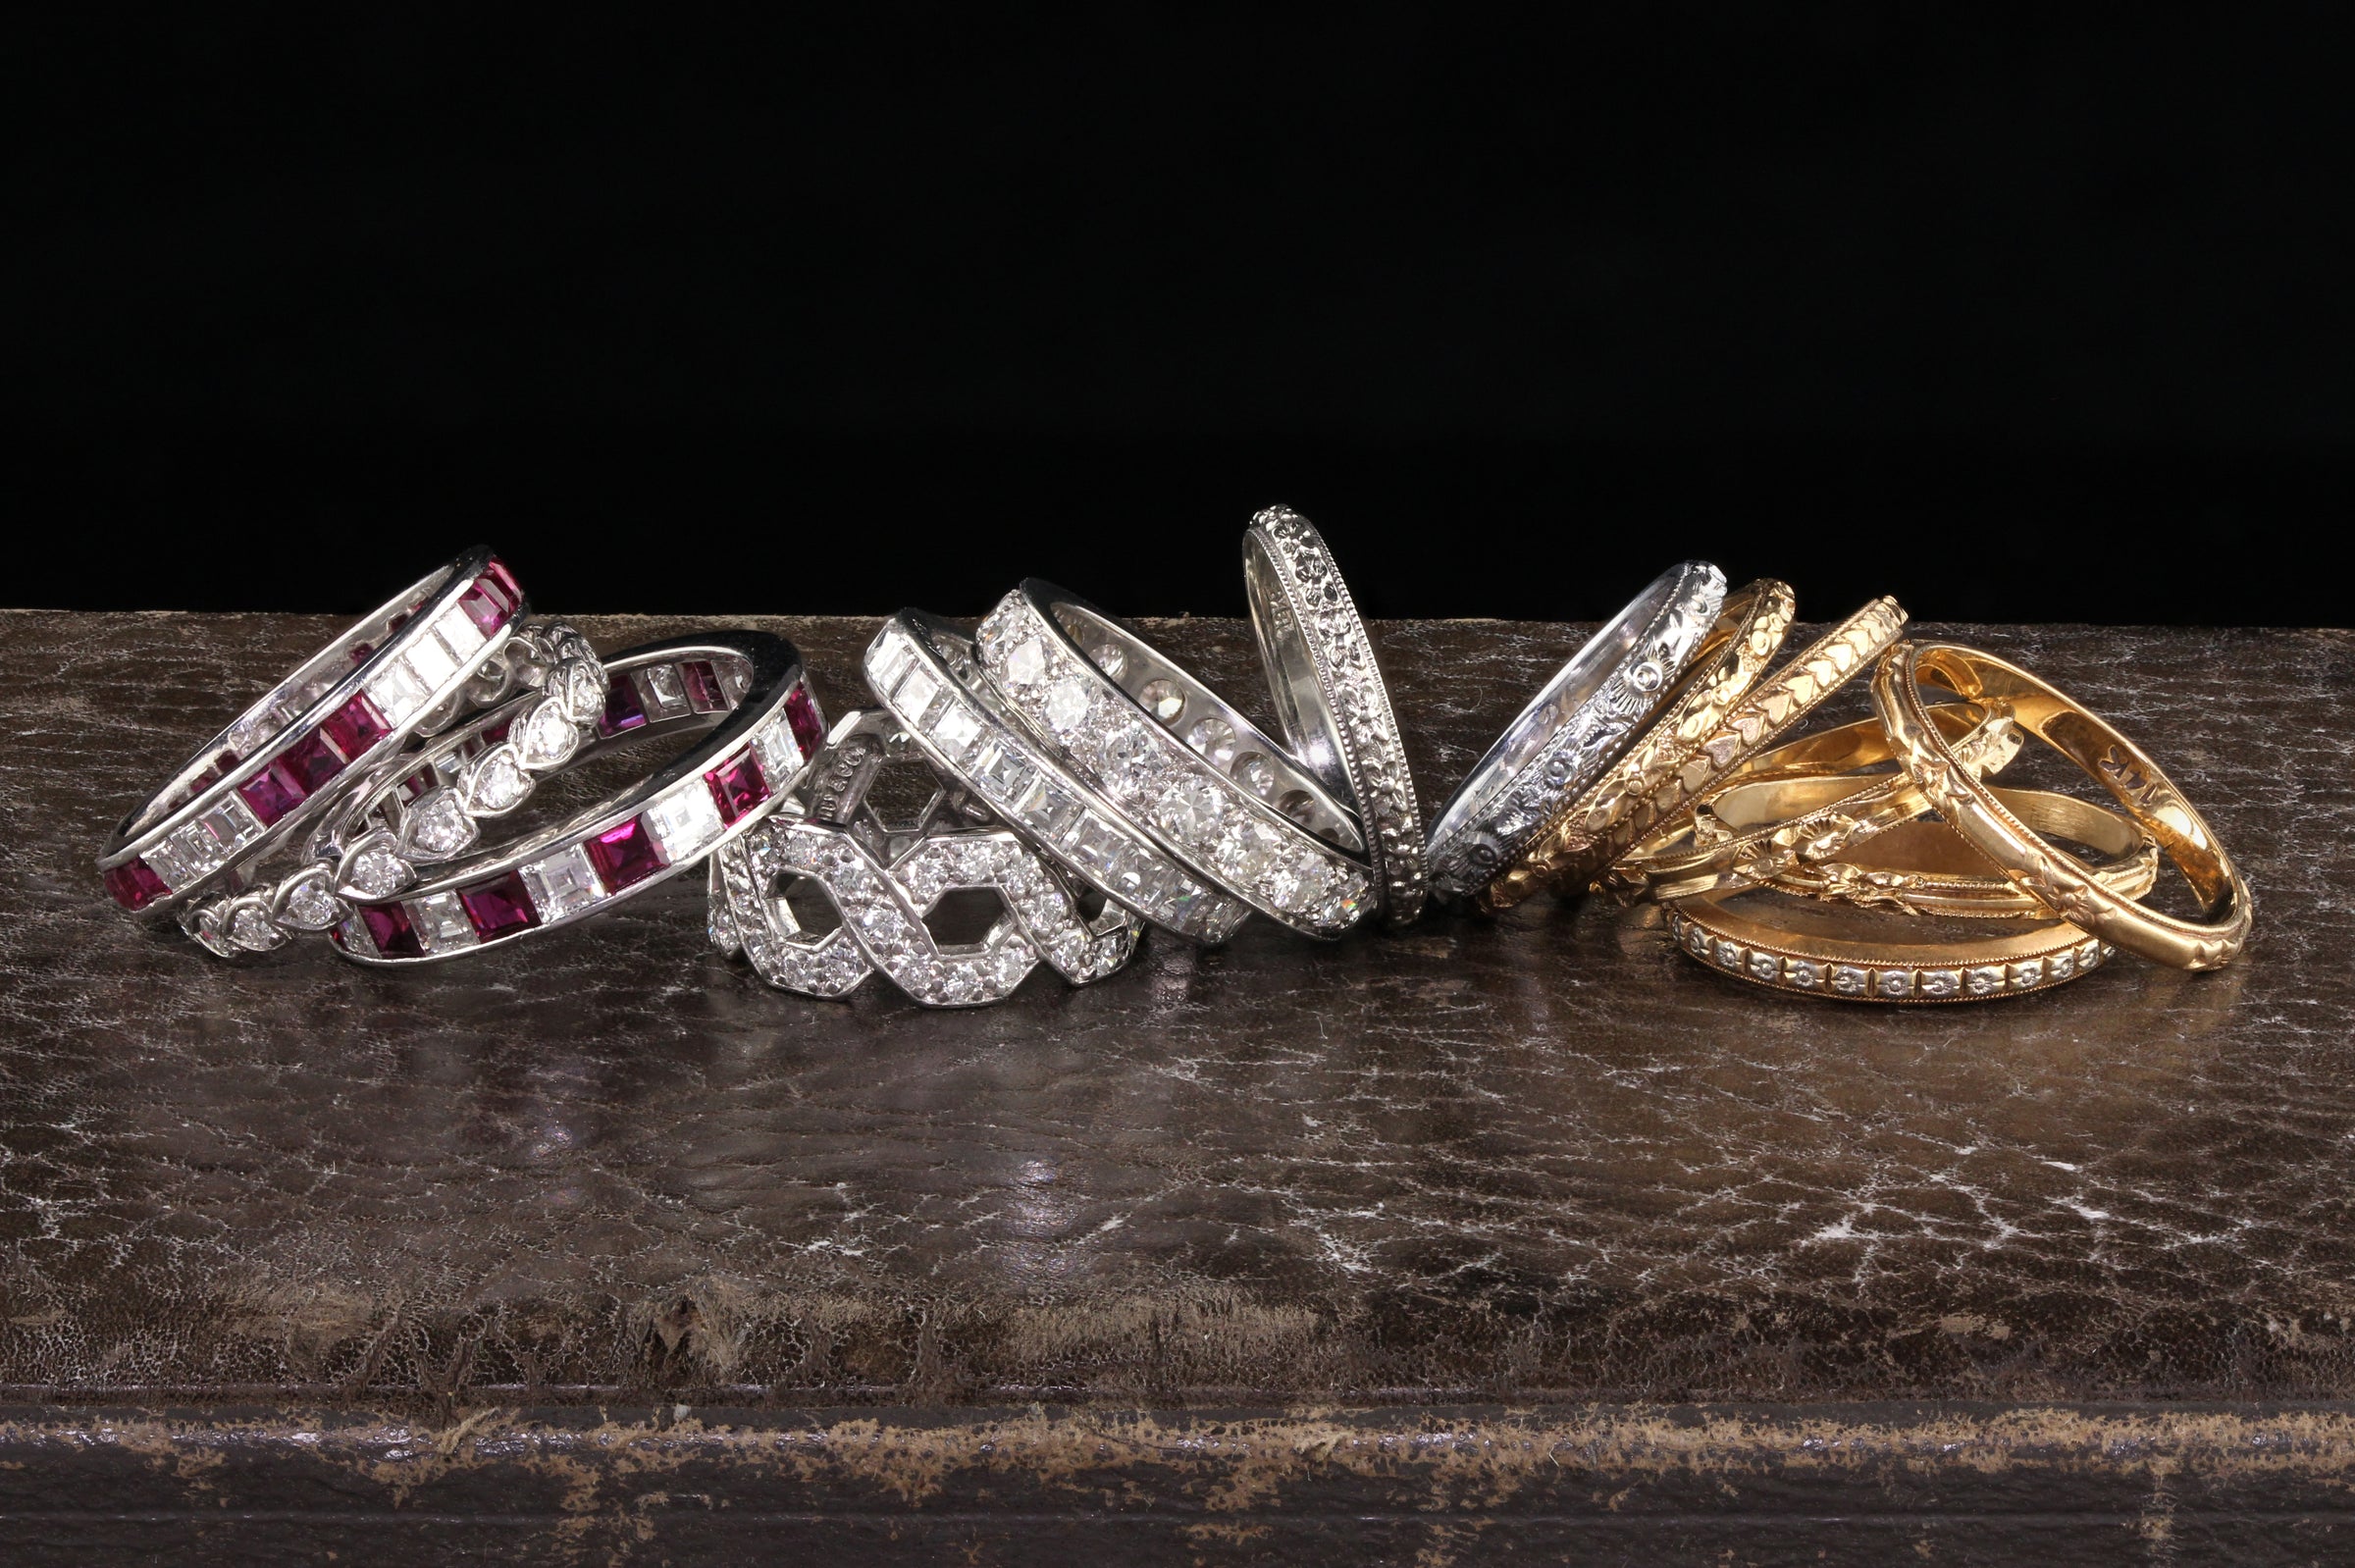 Genuine Wedding Rings :: Diamond Bands 